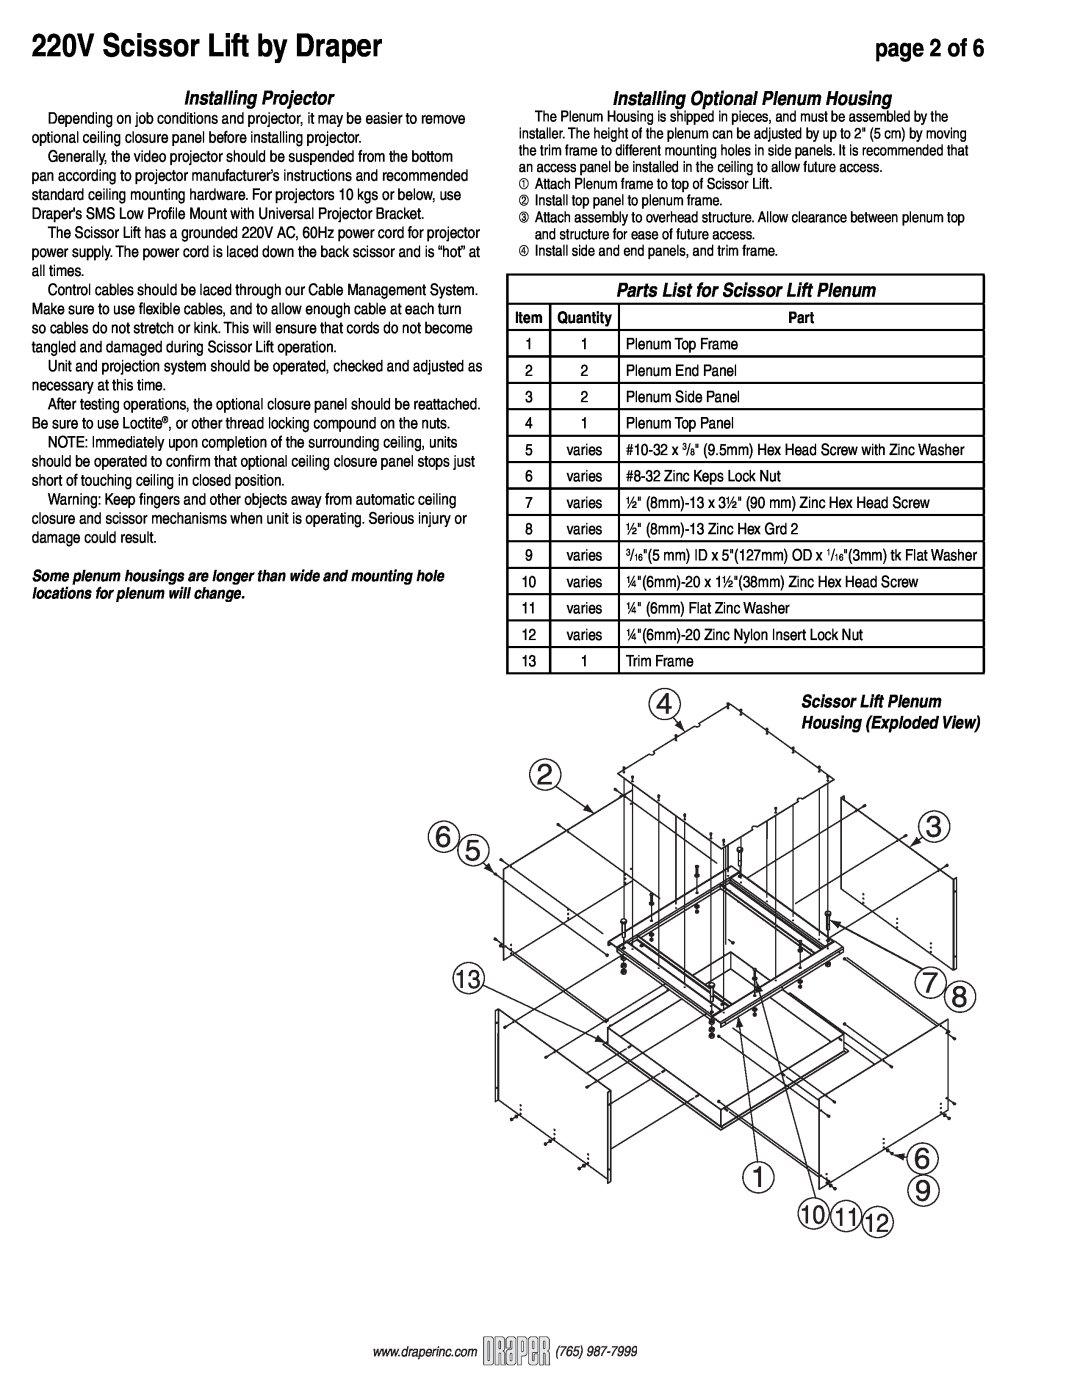 Draper 220V SL 220V Scissor Lift by Draper, page 2 of, Installing Projector, Installing Optional Plenum Housing, Part 